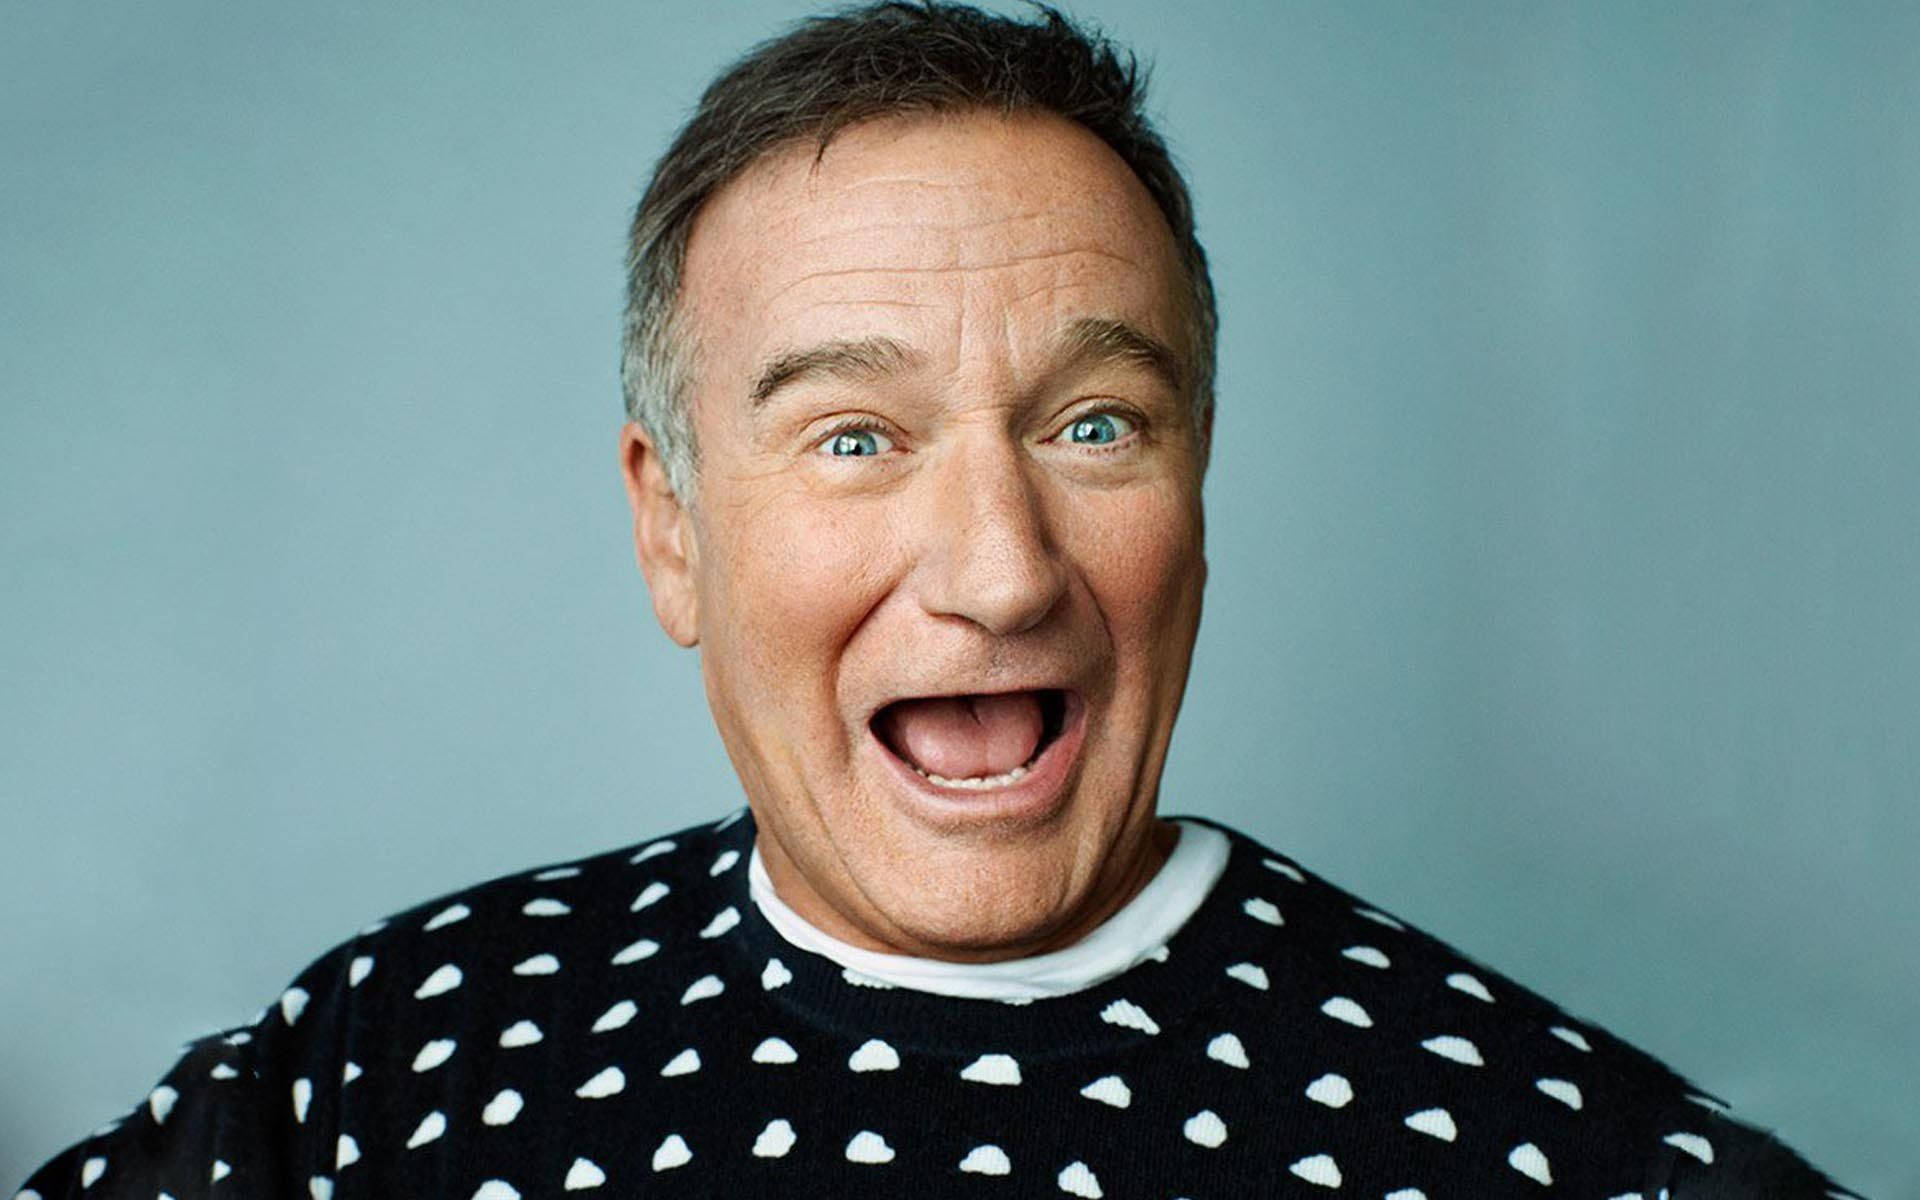 Stunning Robin Williams Smiling Photograph Wallpaper